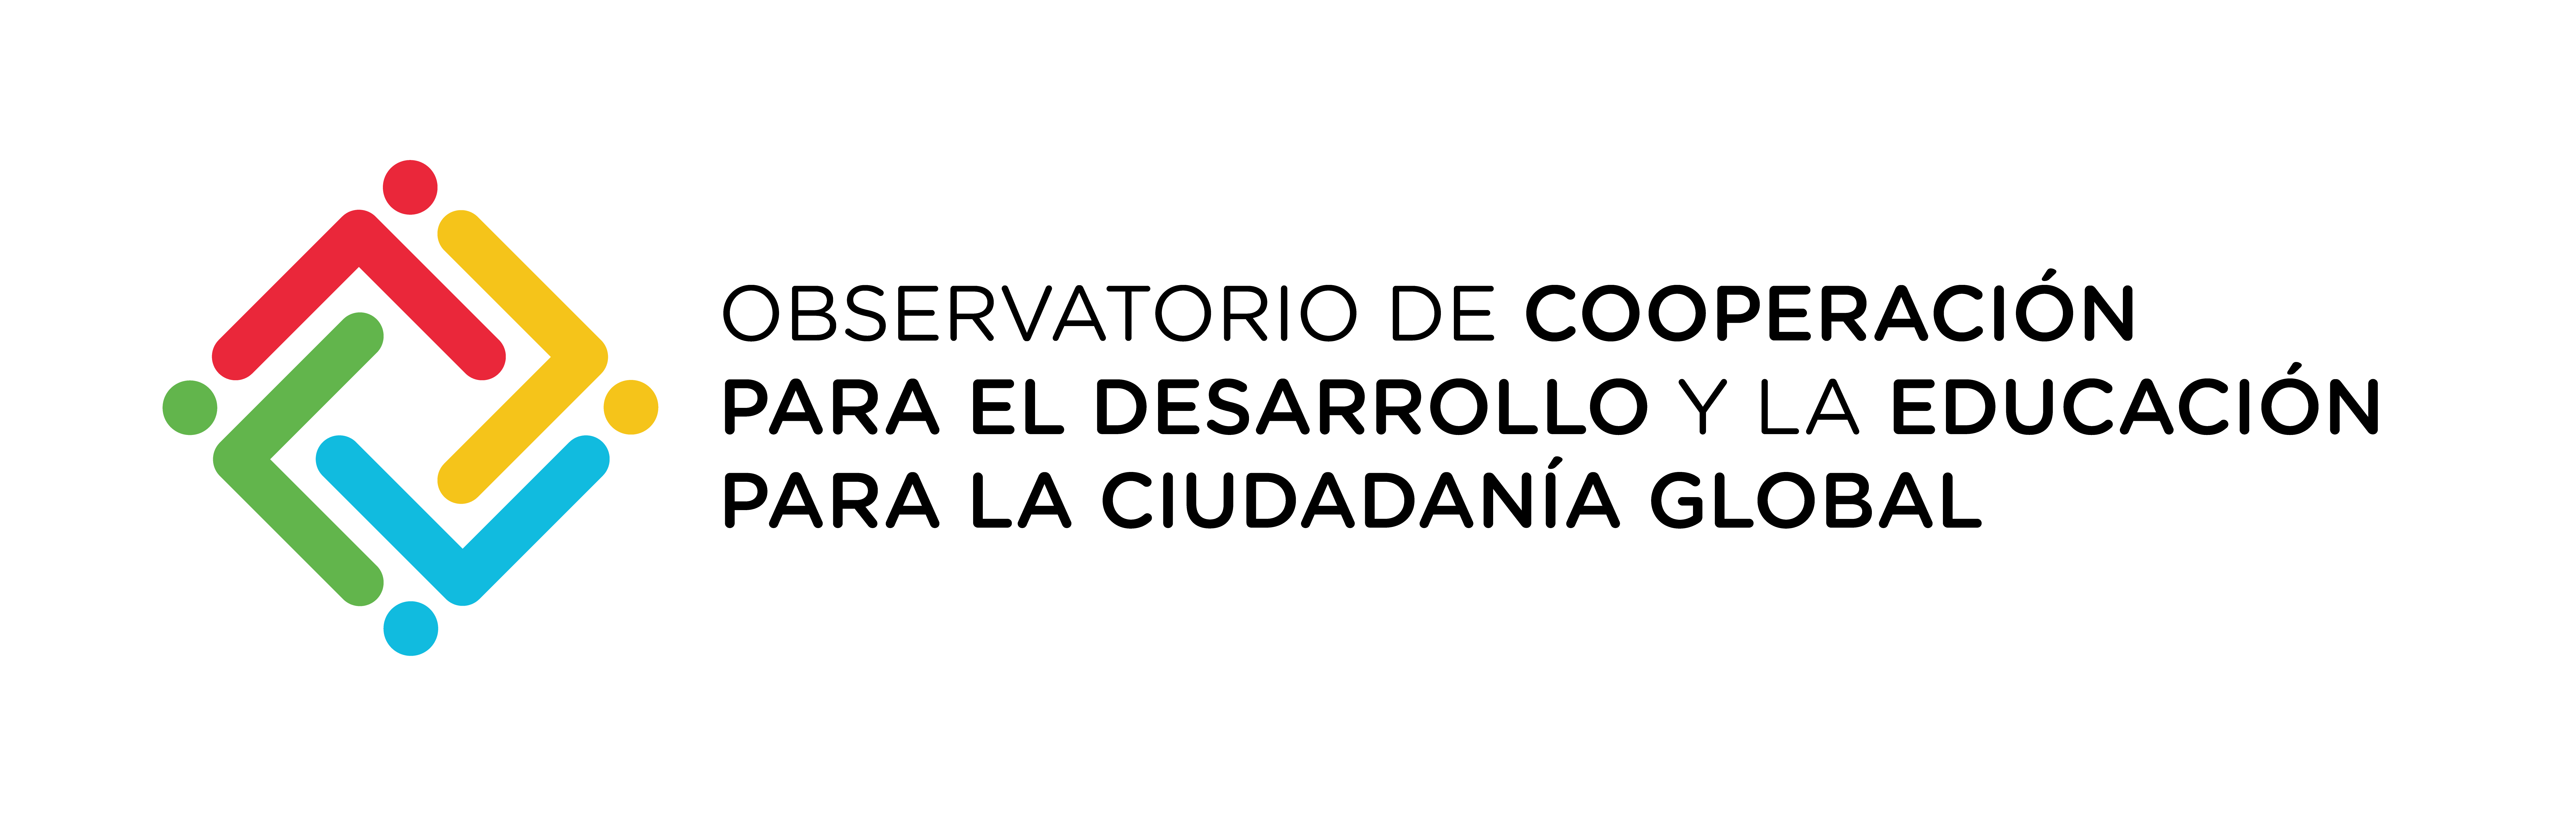 Logo OCatcodes 2.png